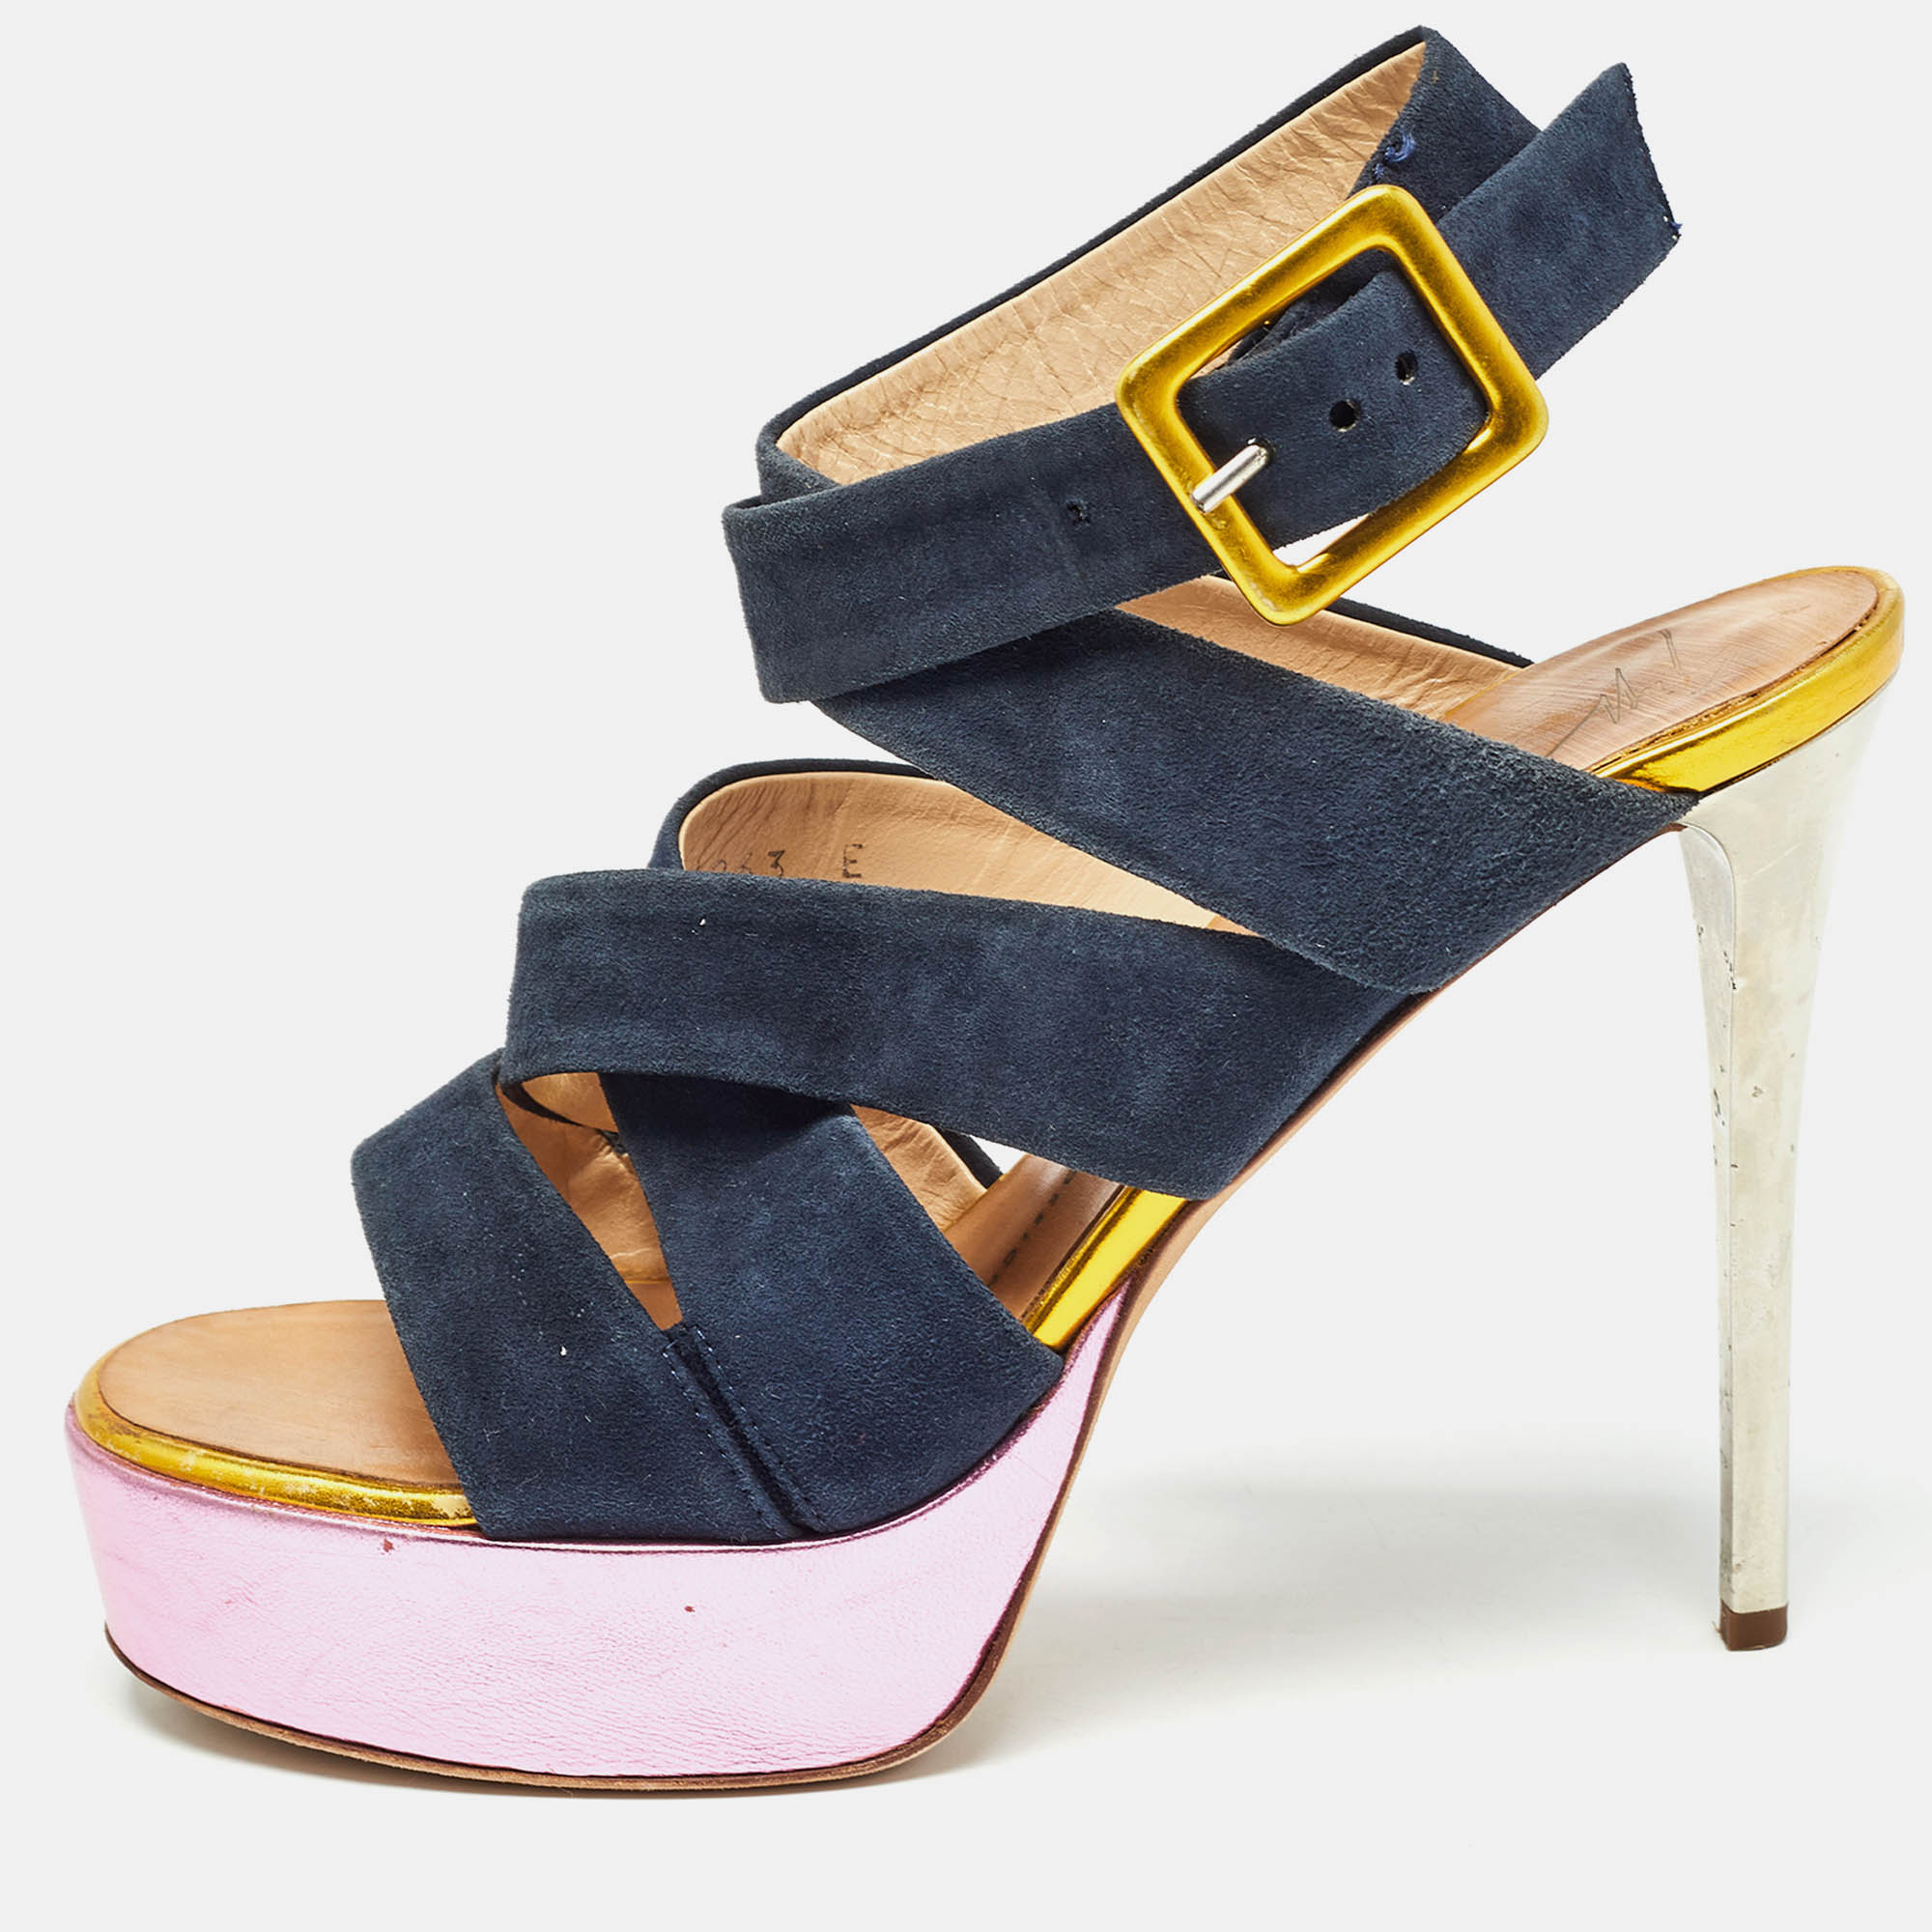 Giuseppe zanotti multicolor suede and leather platform sandals size 39